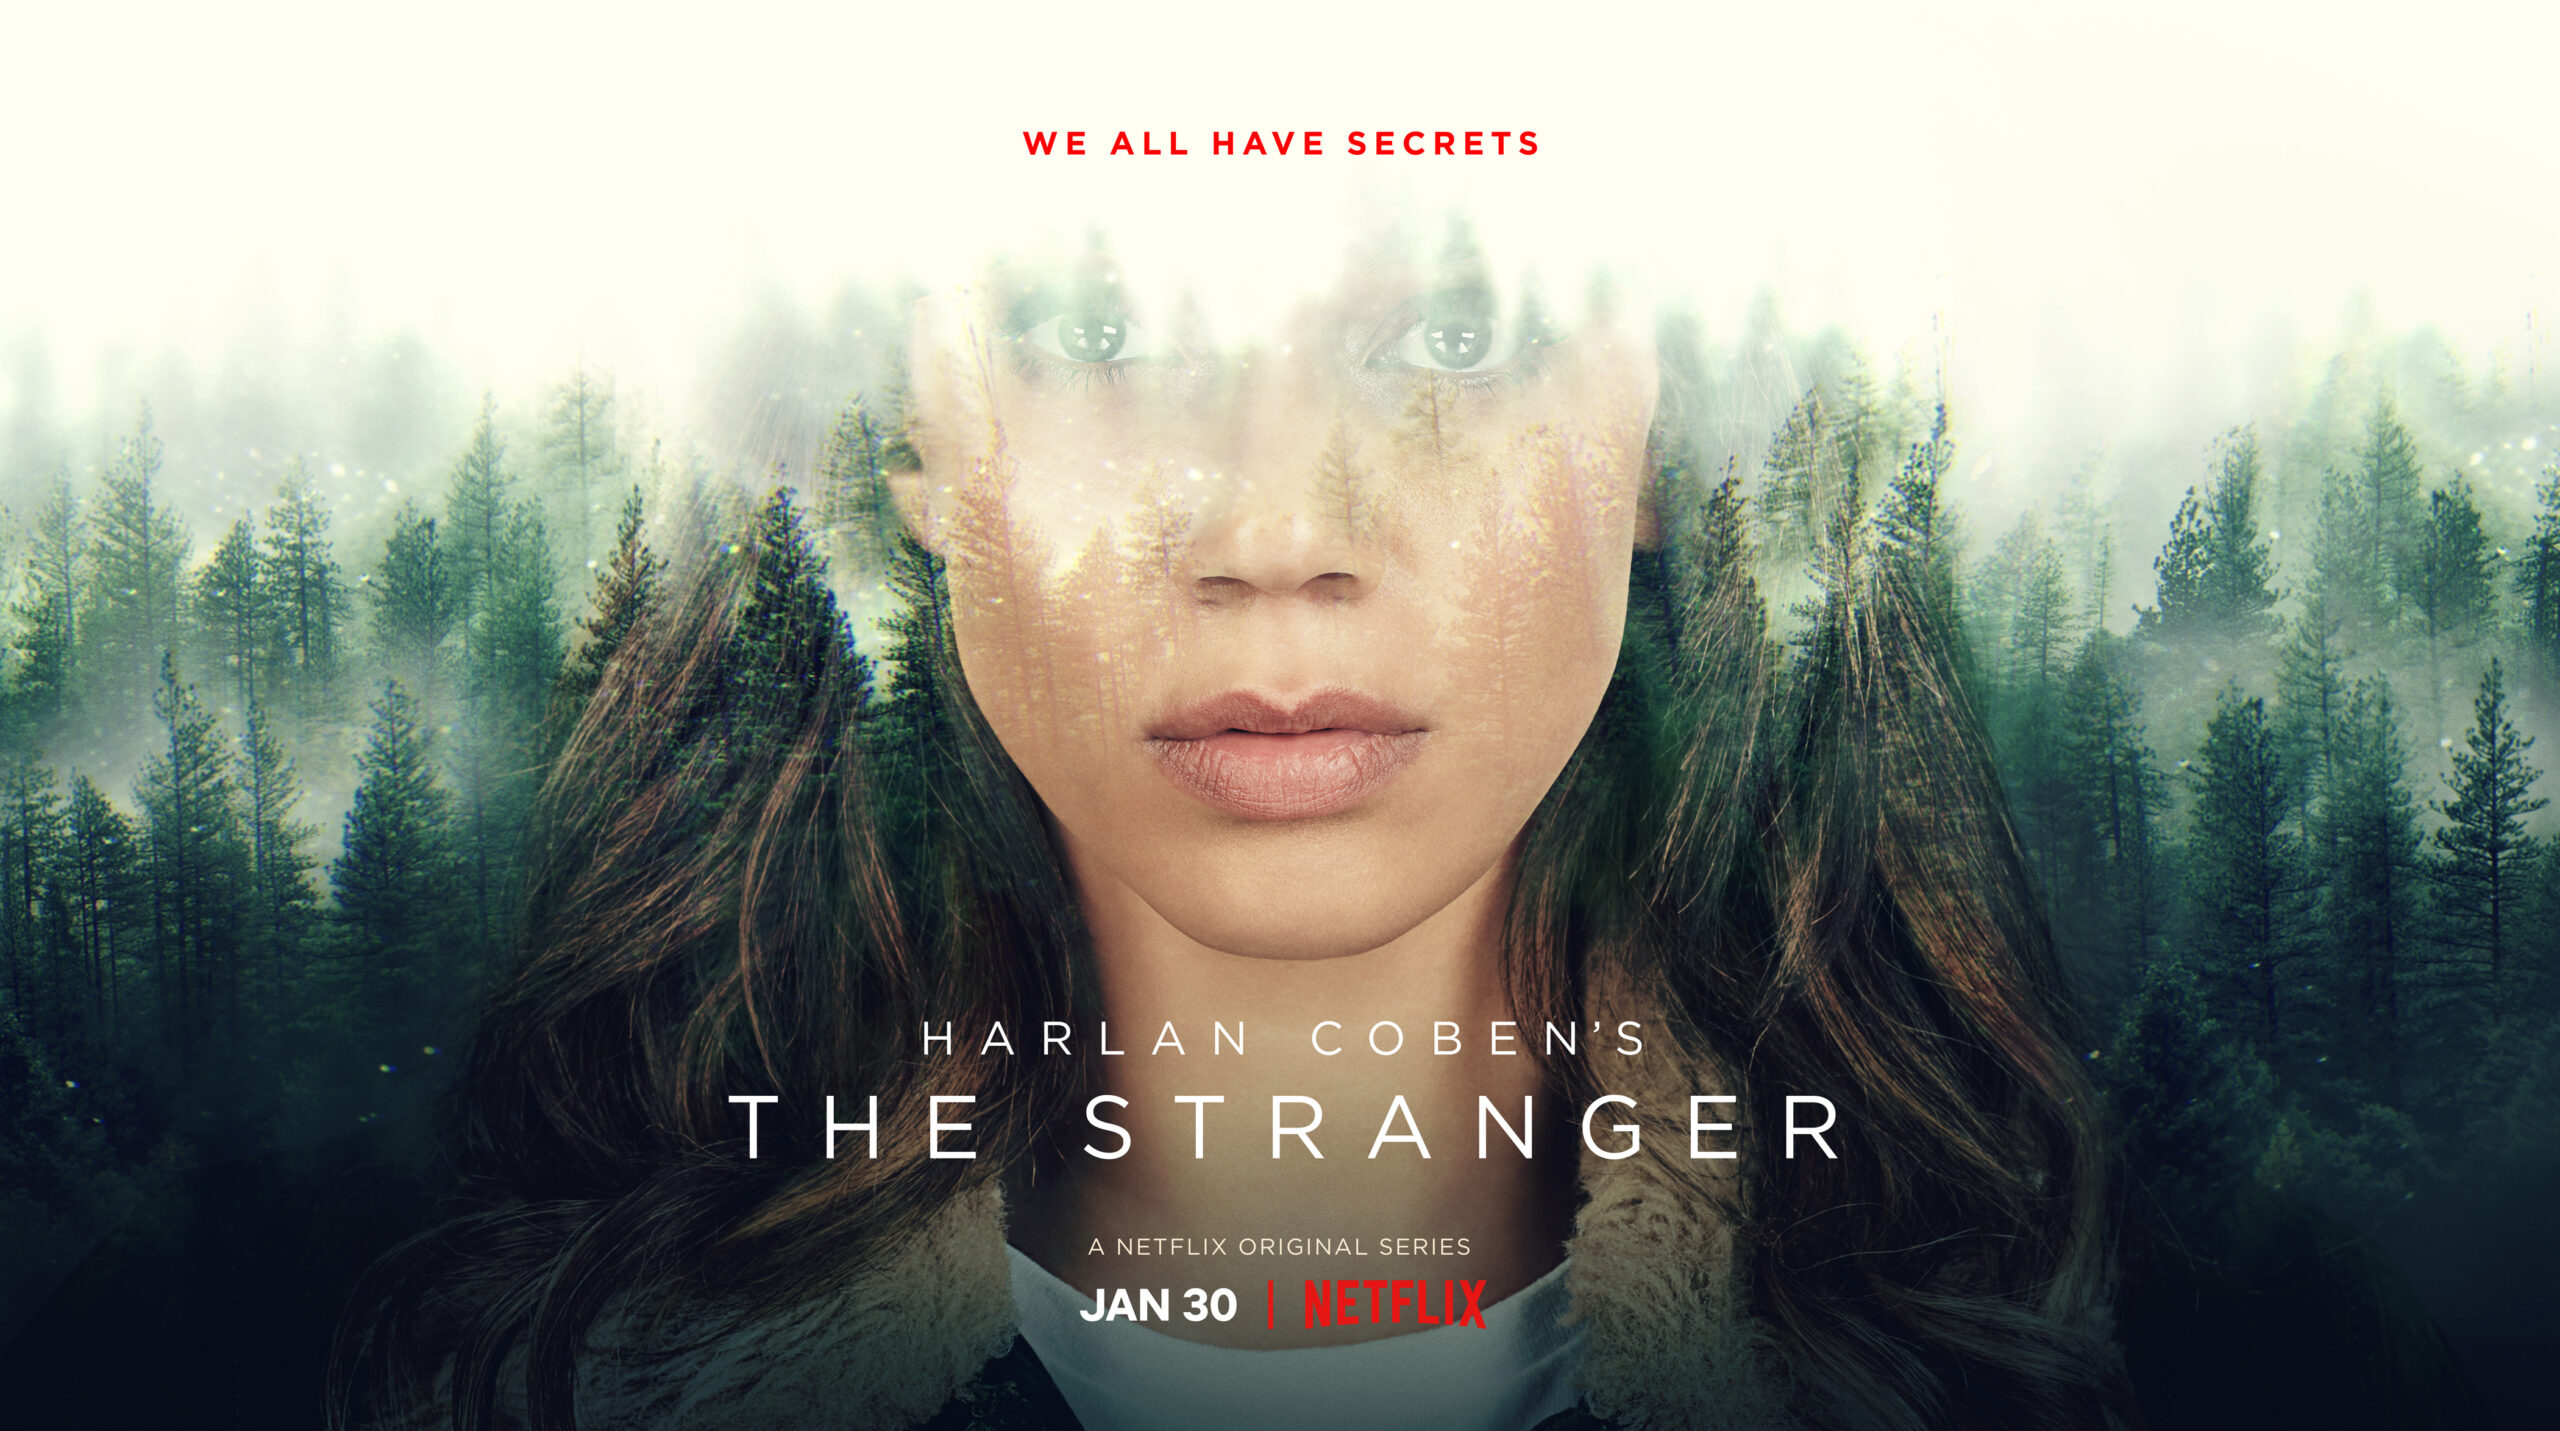 The Stranger [credit: Netflix]